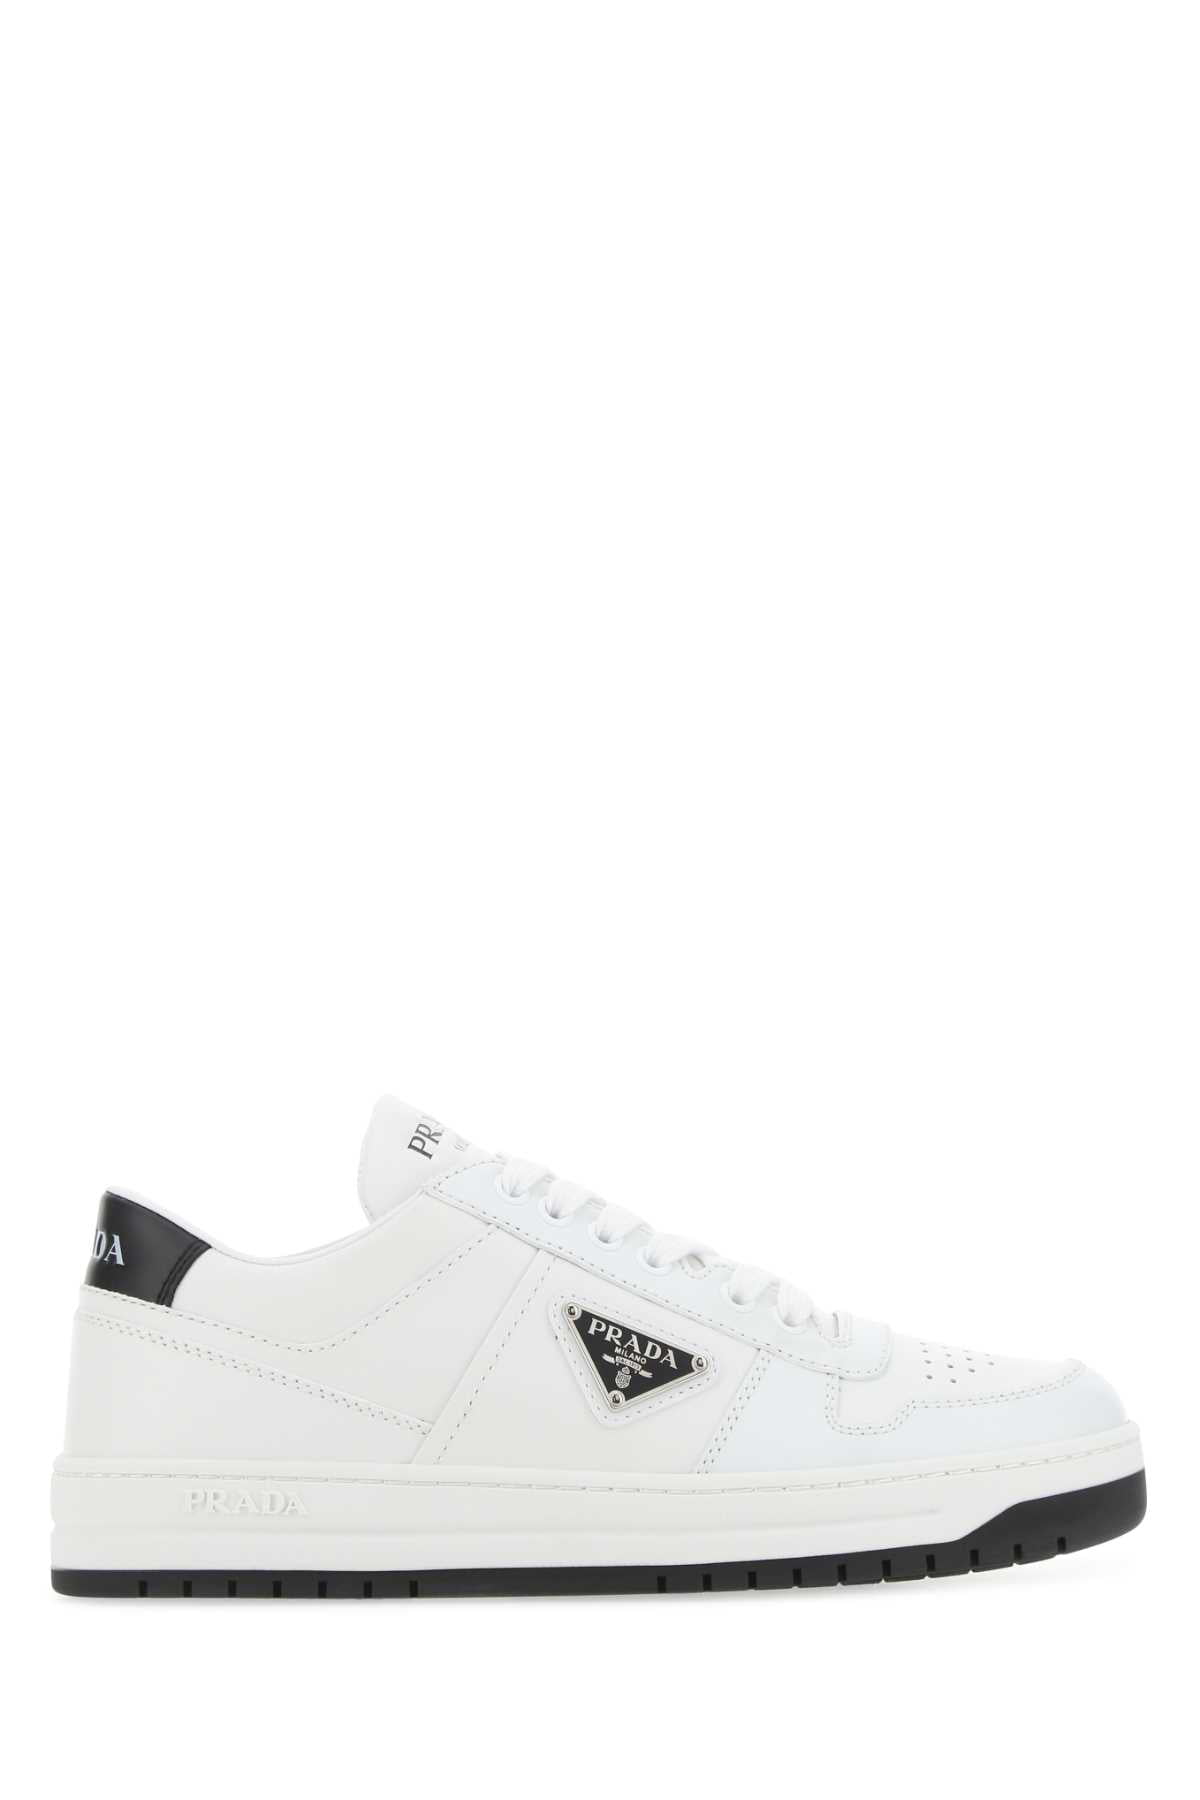 Prada Woman White Leather Downtown Sneakers - Walmart.com